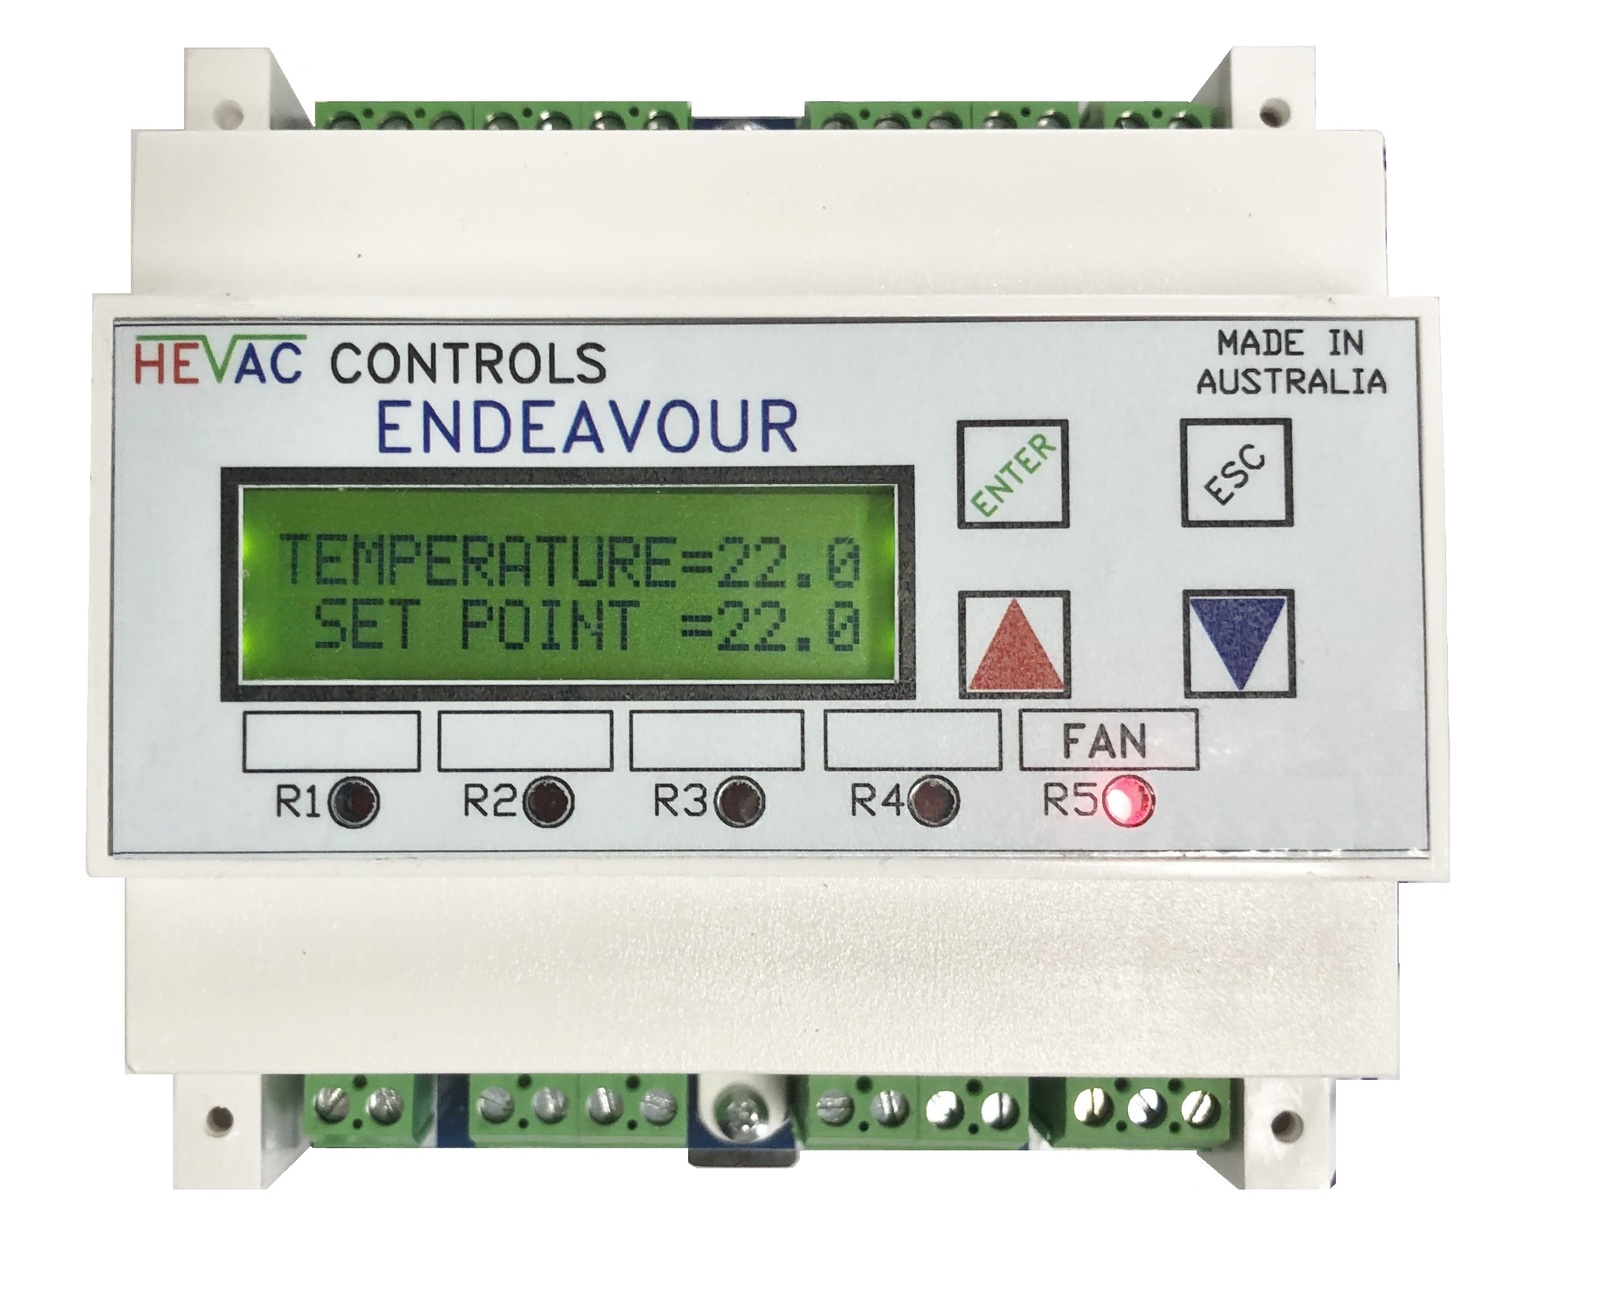 HEVAC Endeavour Programmable Temperature Controller